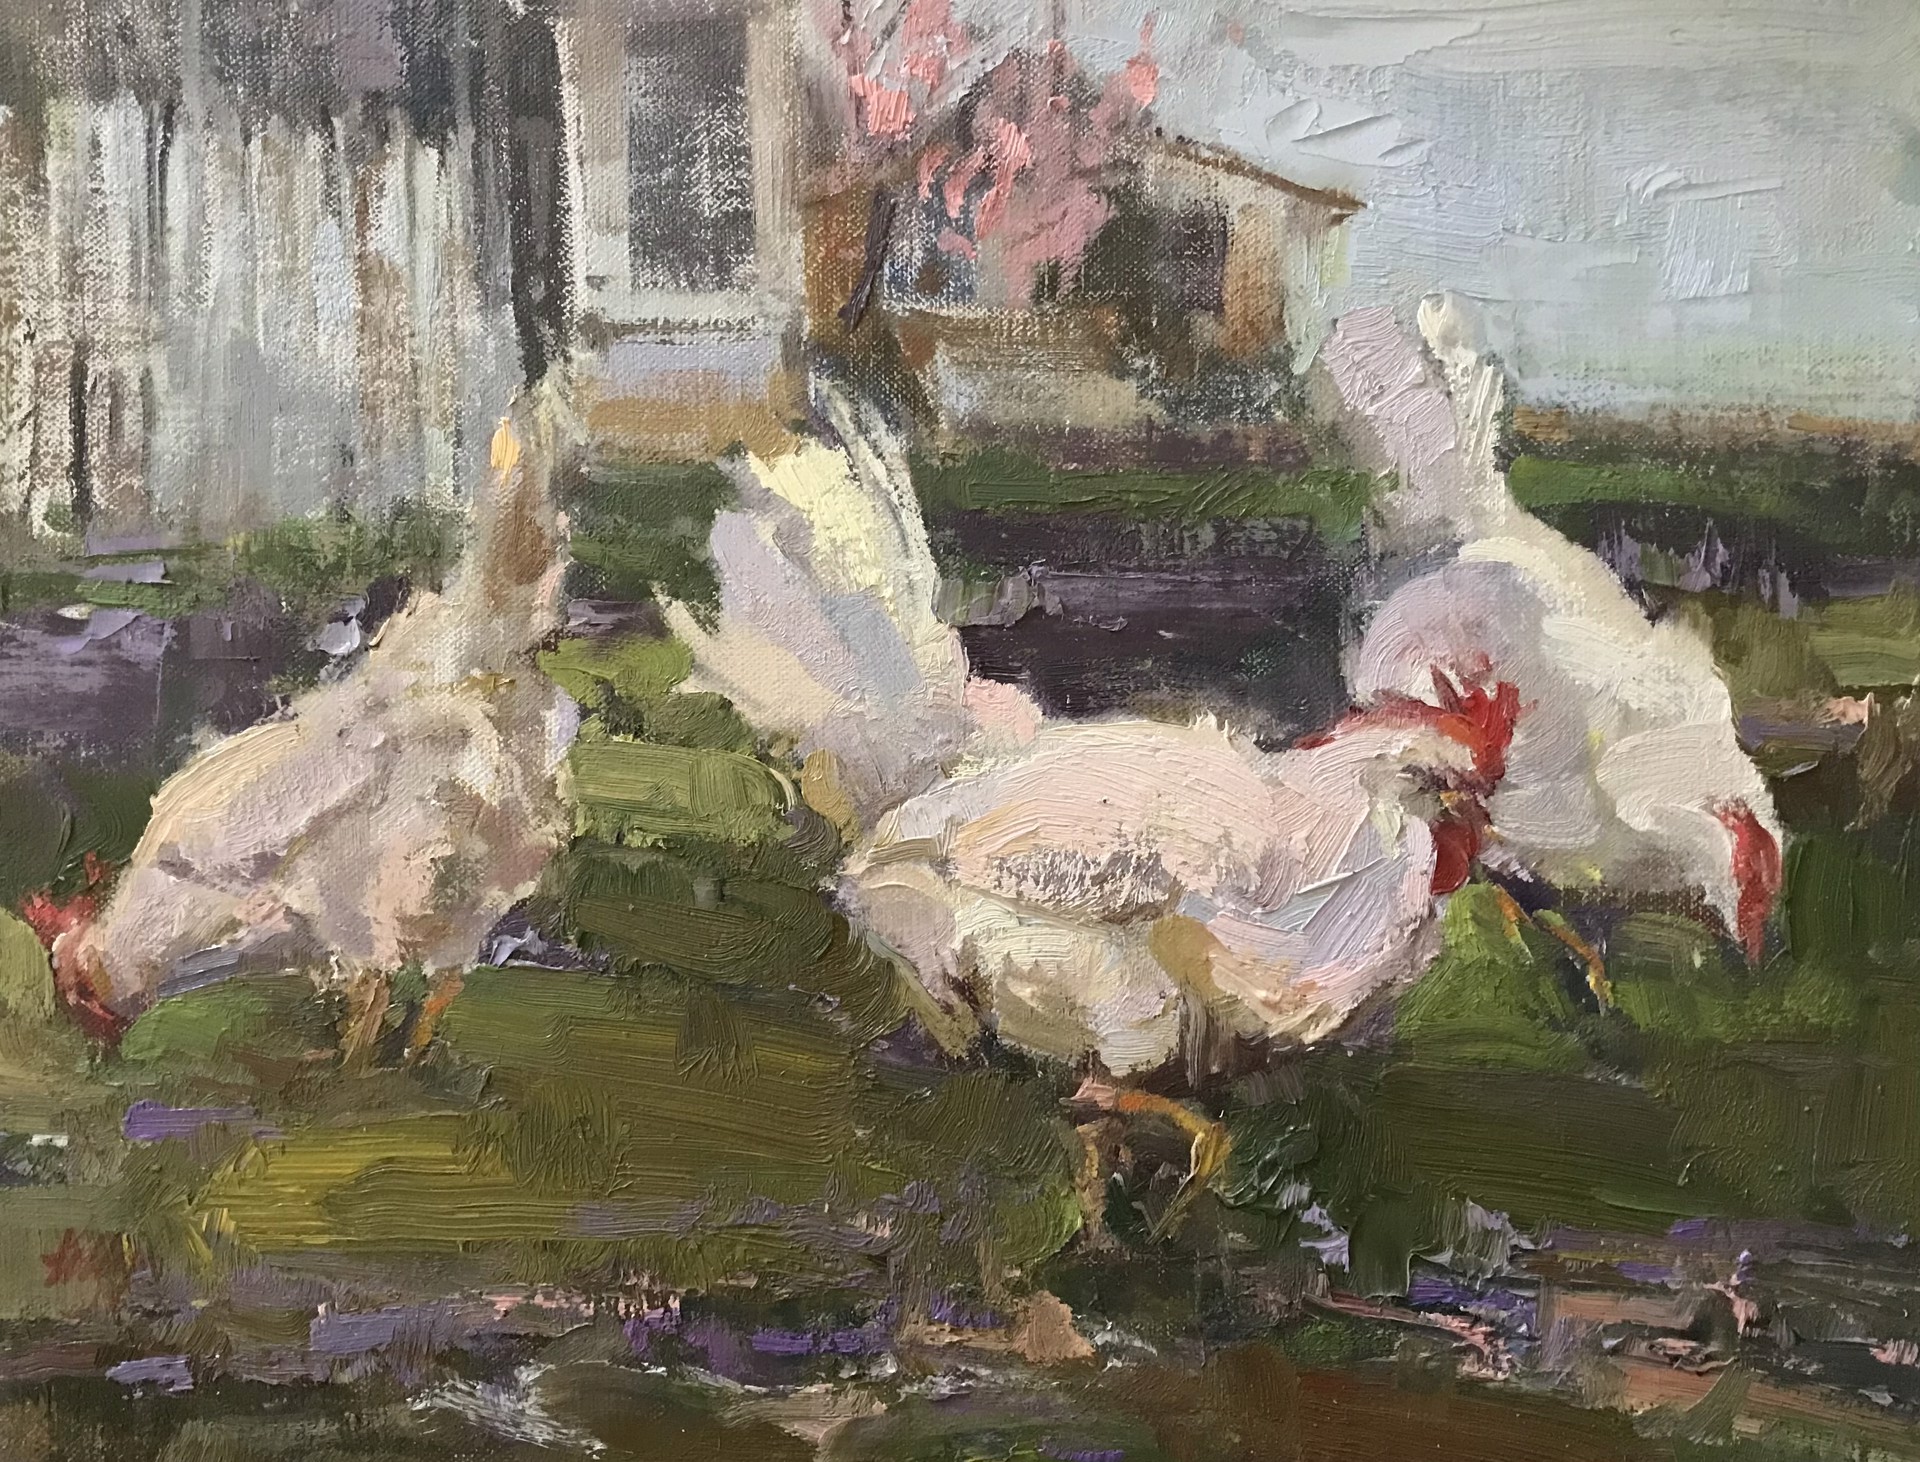 Chick, Chick by Kelly Pennington